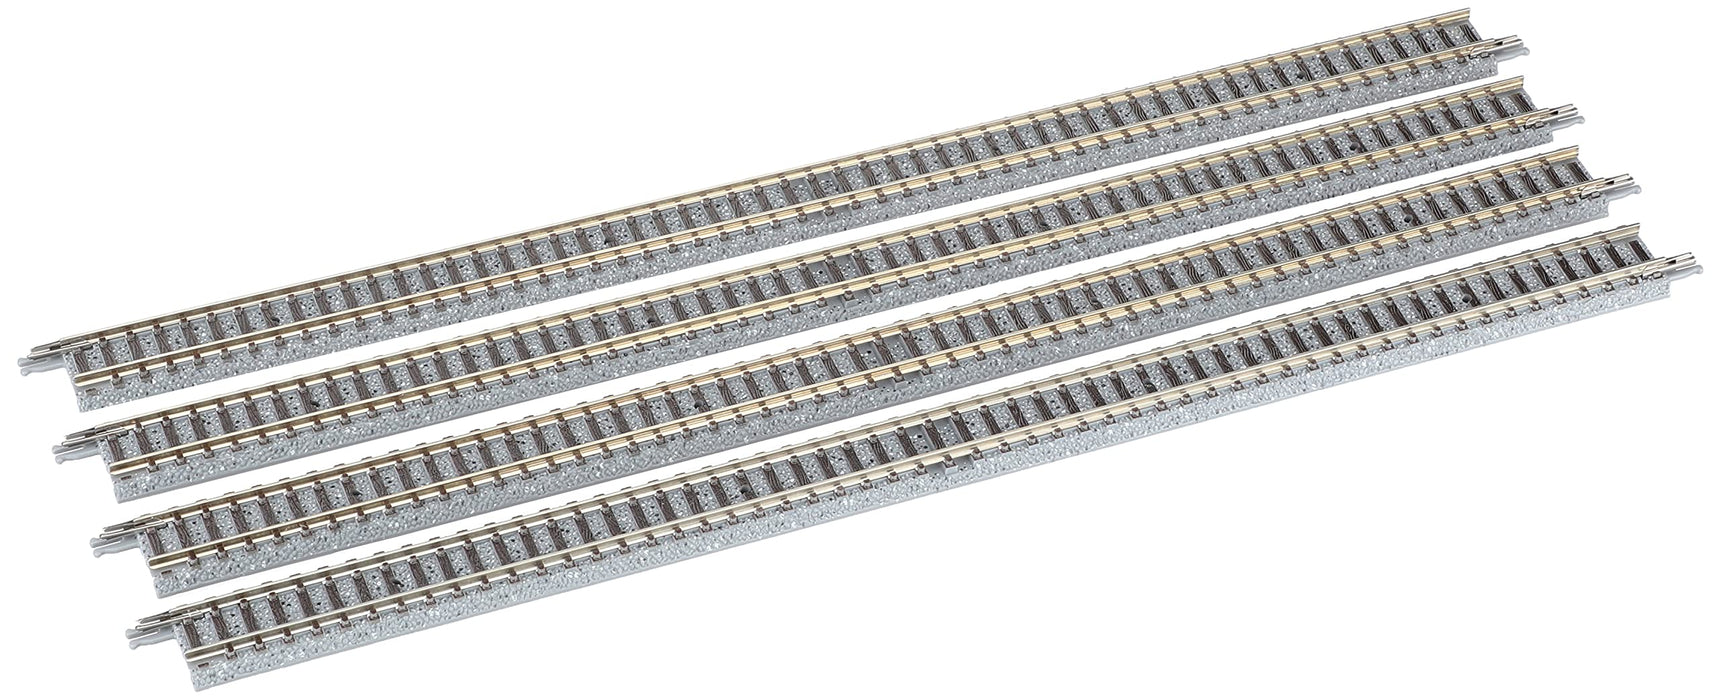 Tomytec Straight Rail S280 F Set of 4 N Gauge 1802 Railway Model Supplies